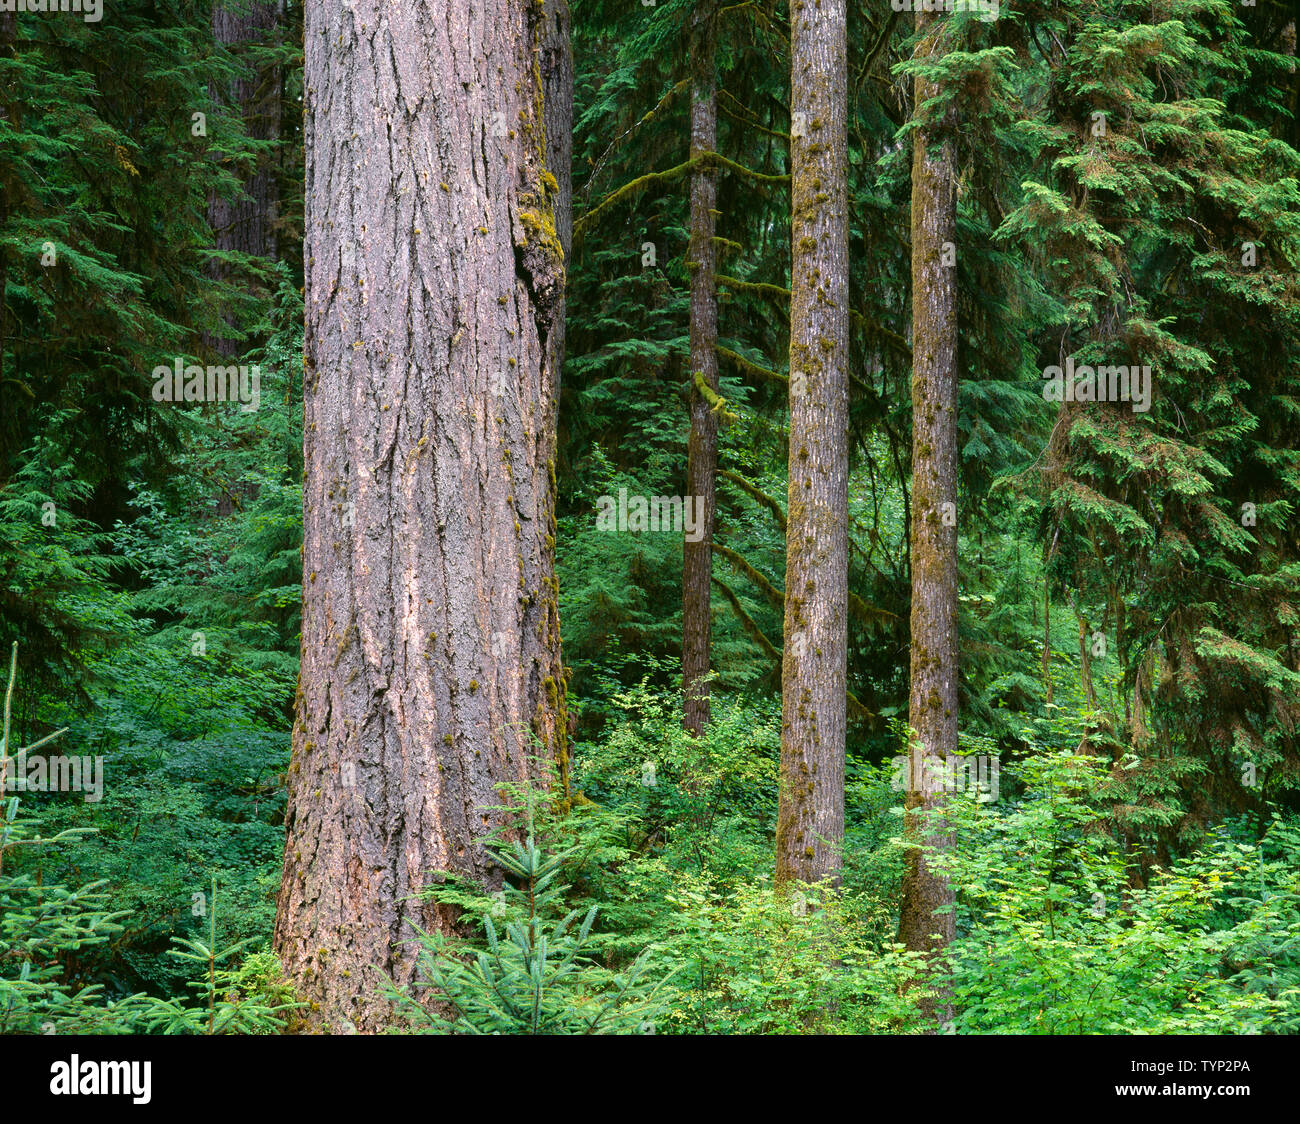 USA, Washington, Olympic National Park, Massive trunk of Douglas fir and smaller western hemlocks, Quinault Rain Forest. Stock Photo